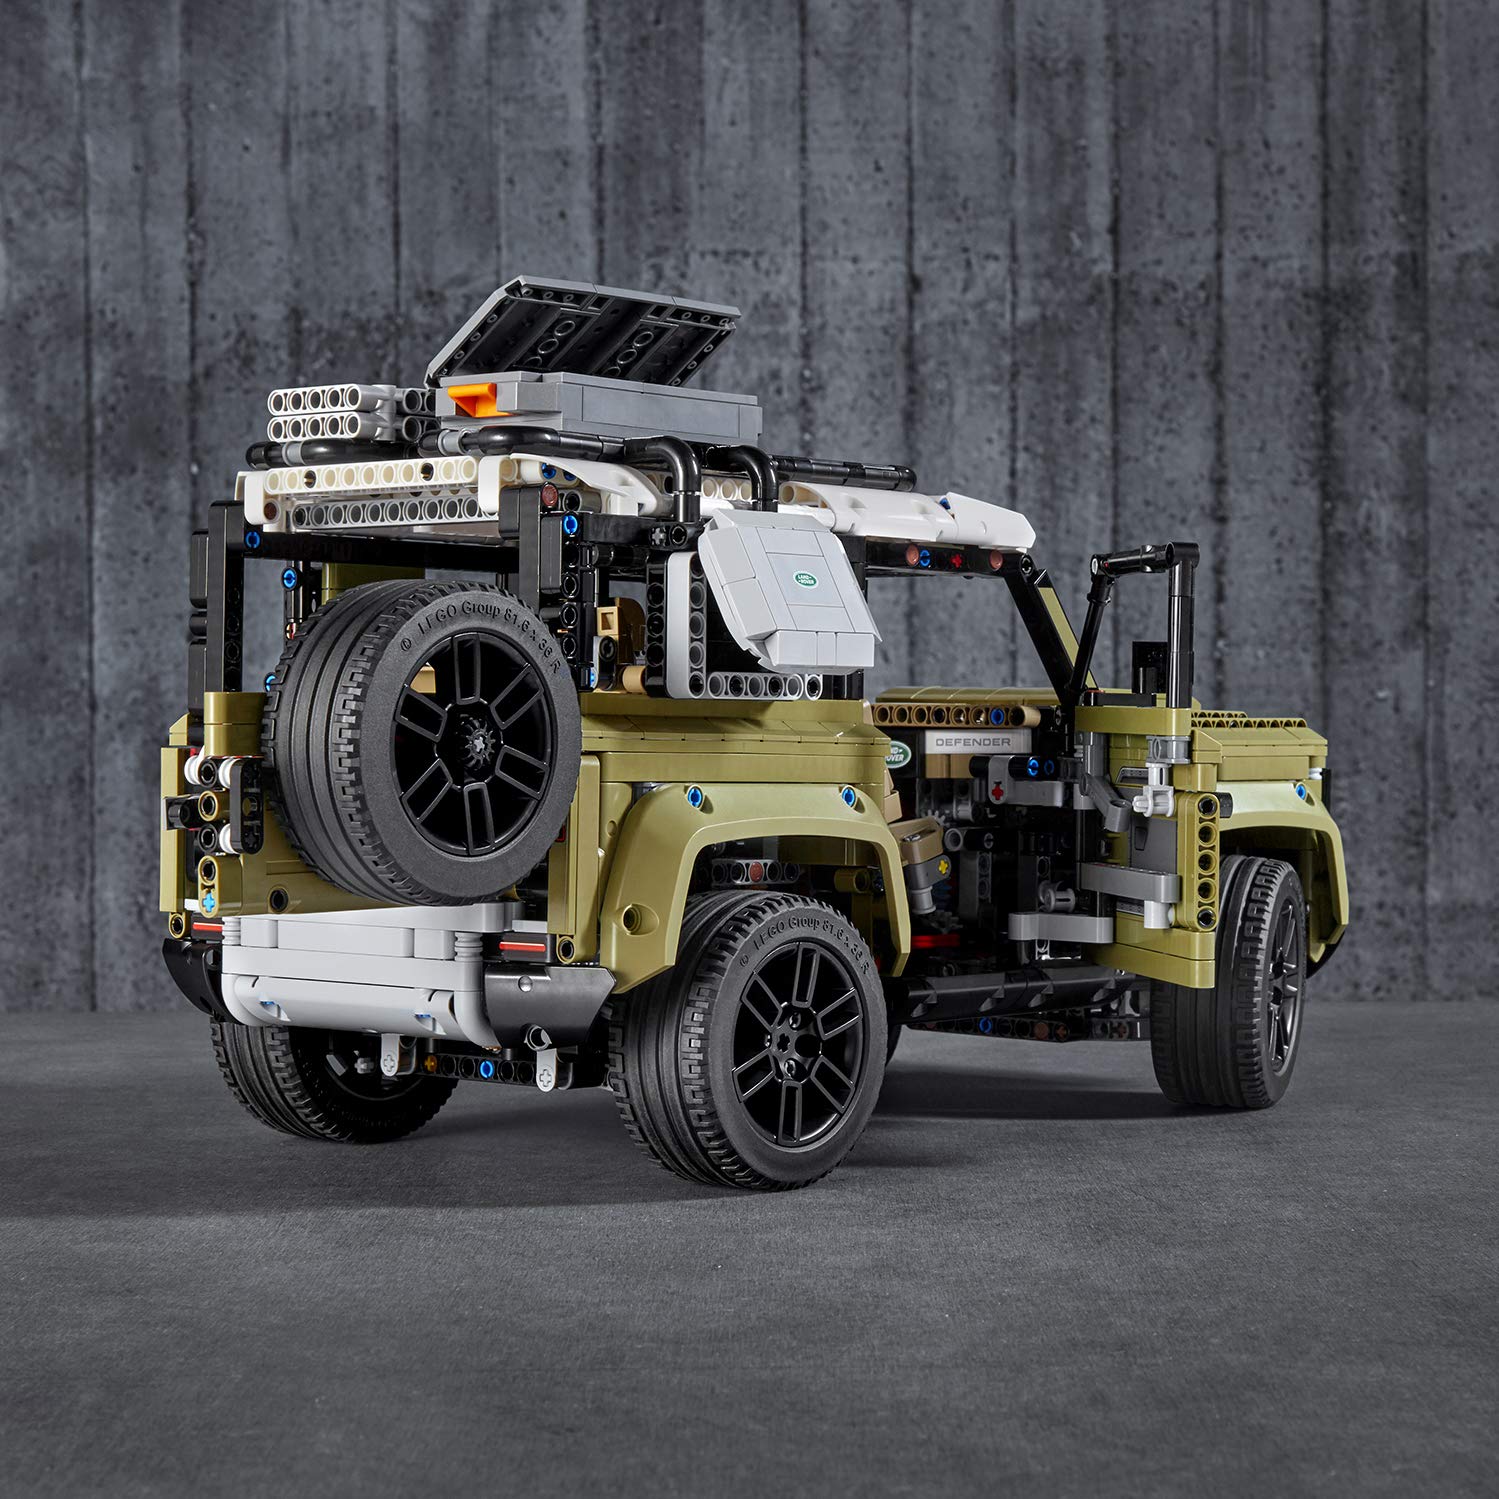 Technic Land Rover Defender